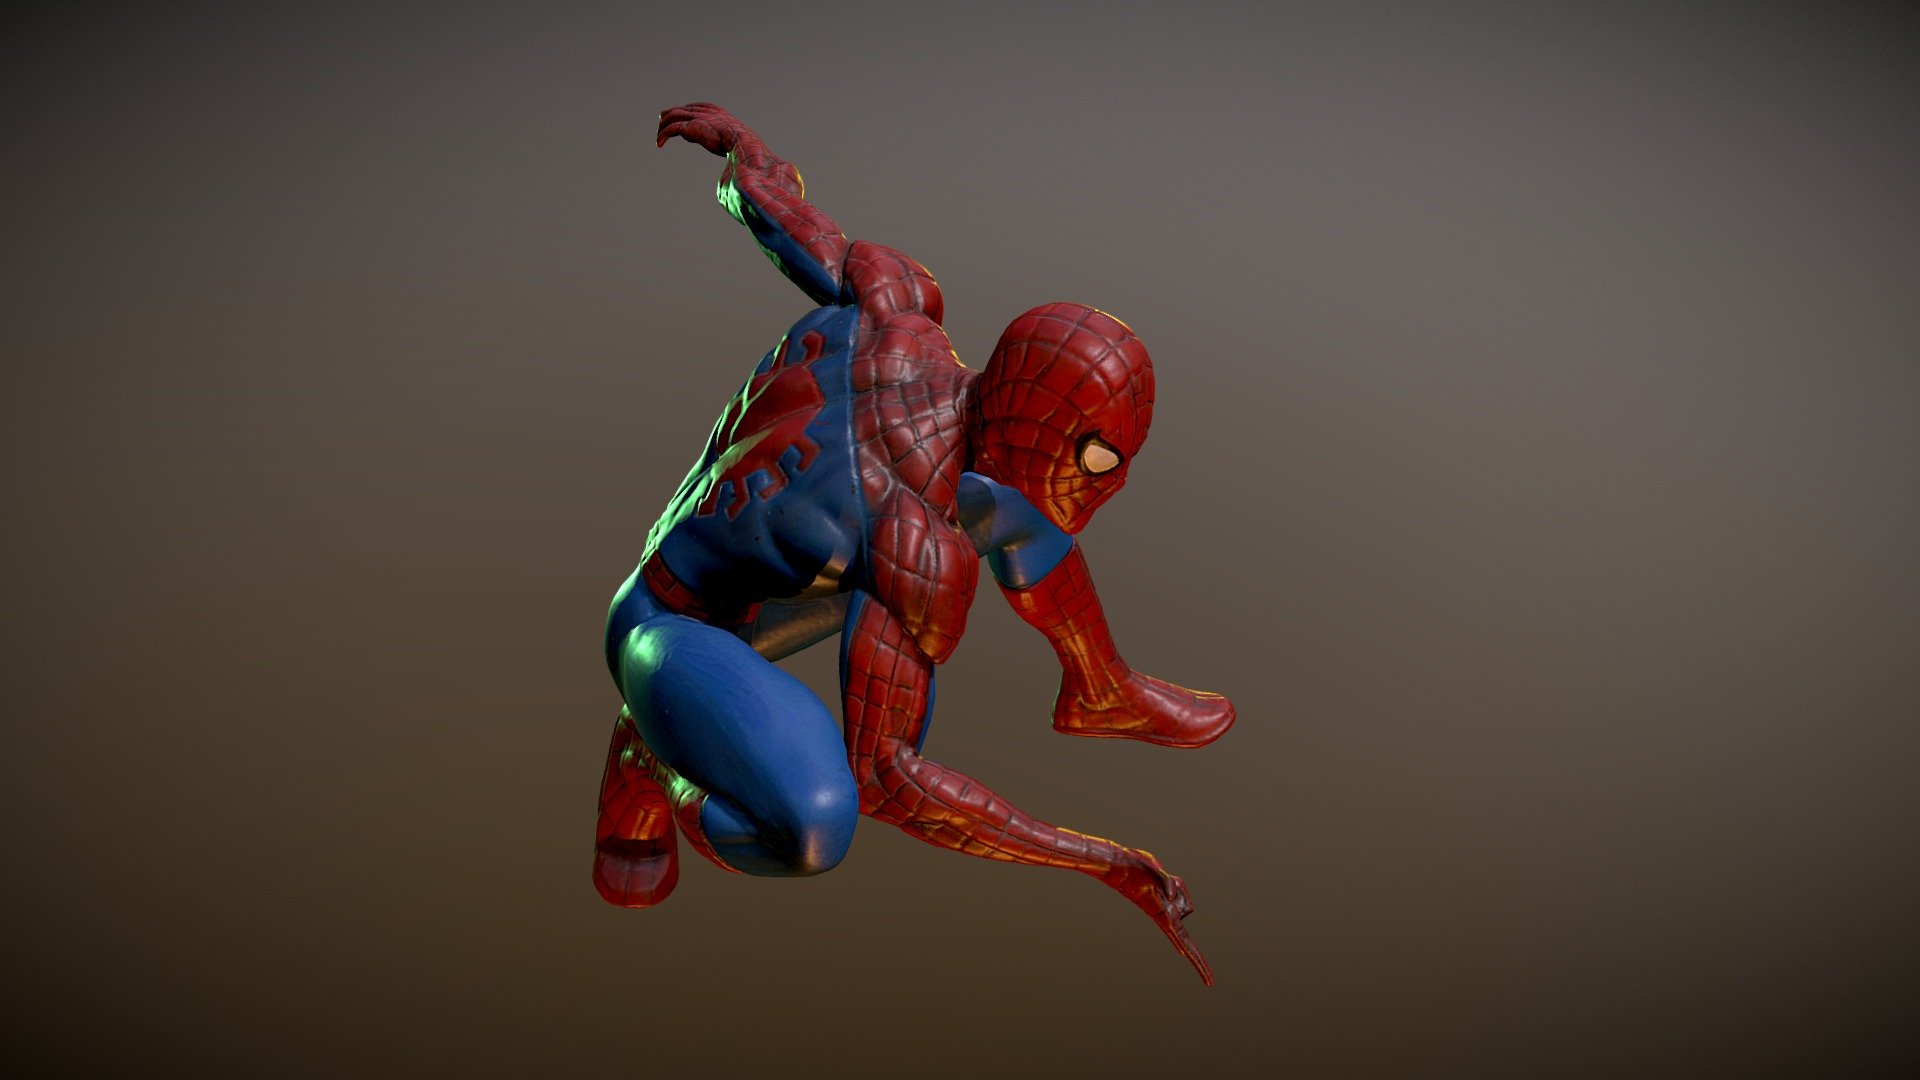 Spiderman Pose 2 - 4x4x5